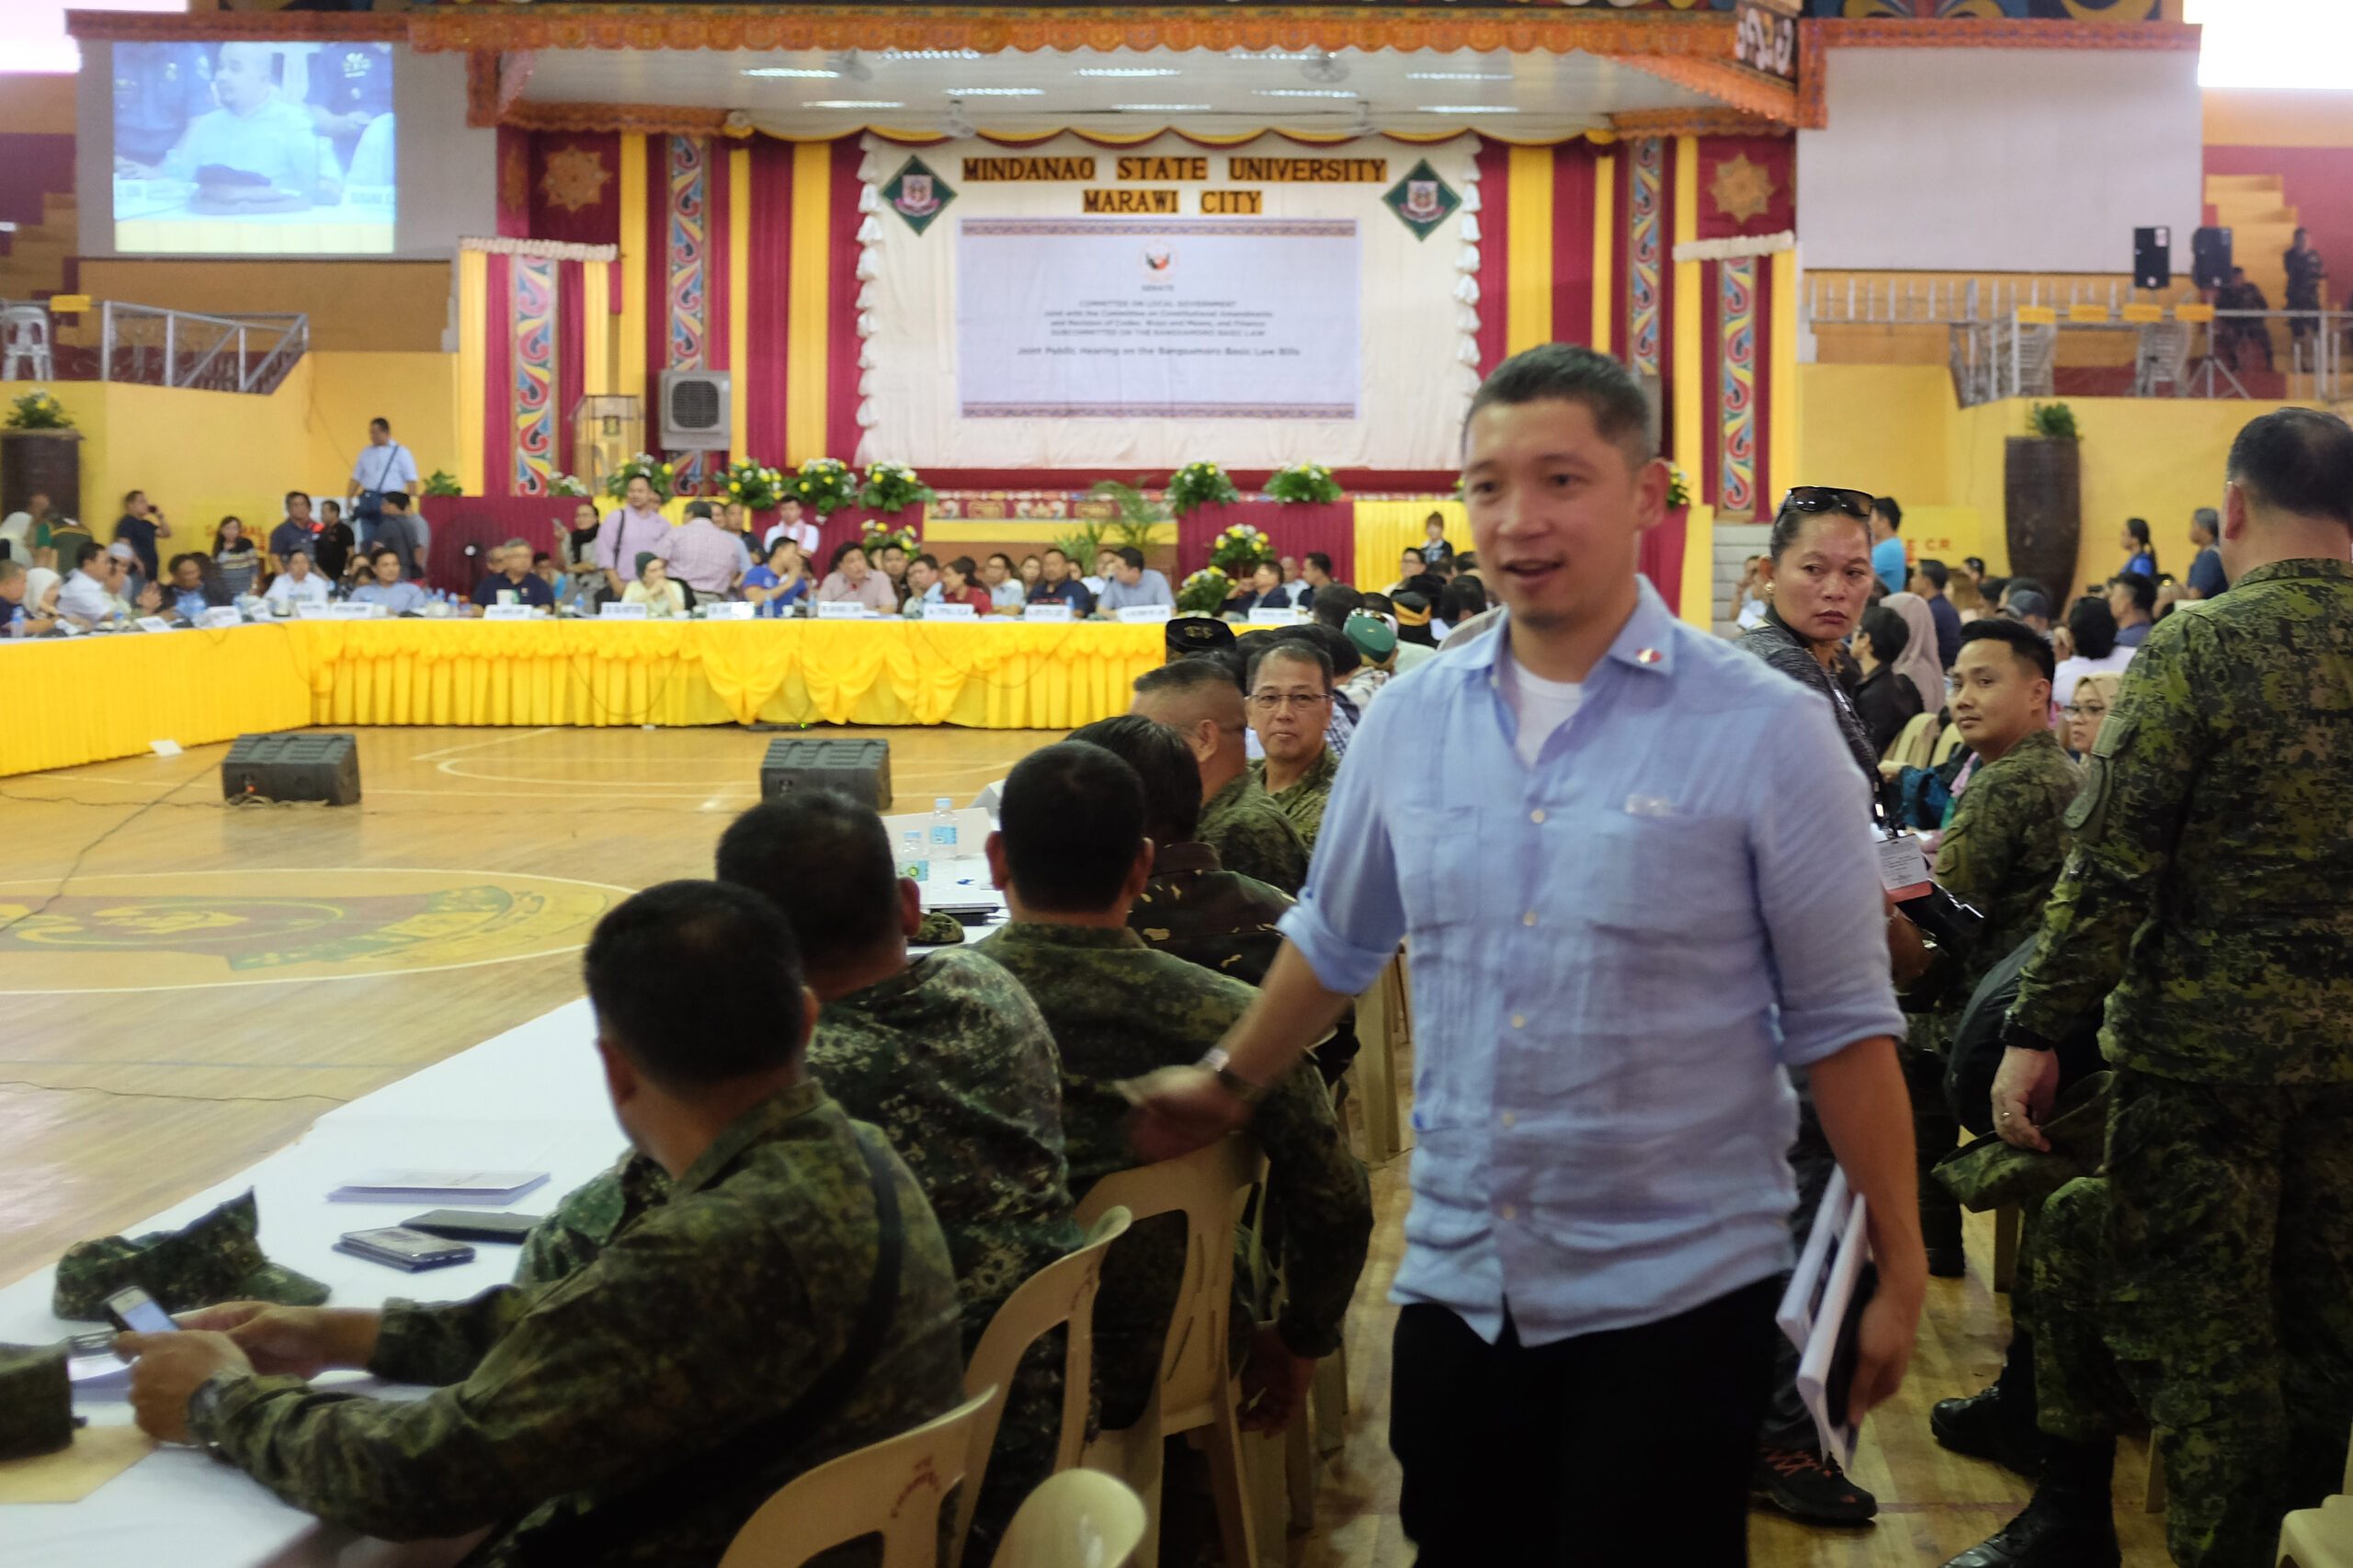 Senators to battle-weary Marawi: ‘We will pass Bangsamoro law’